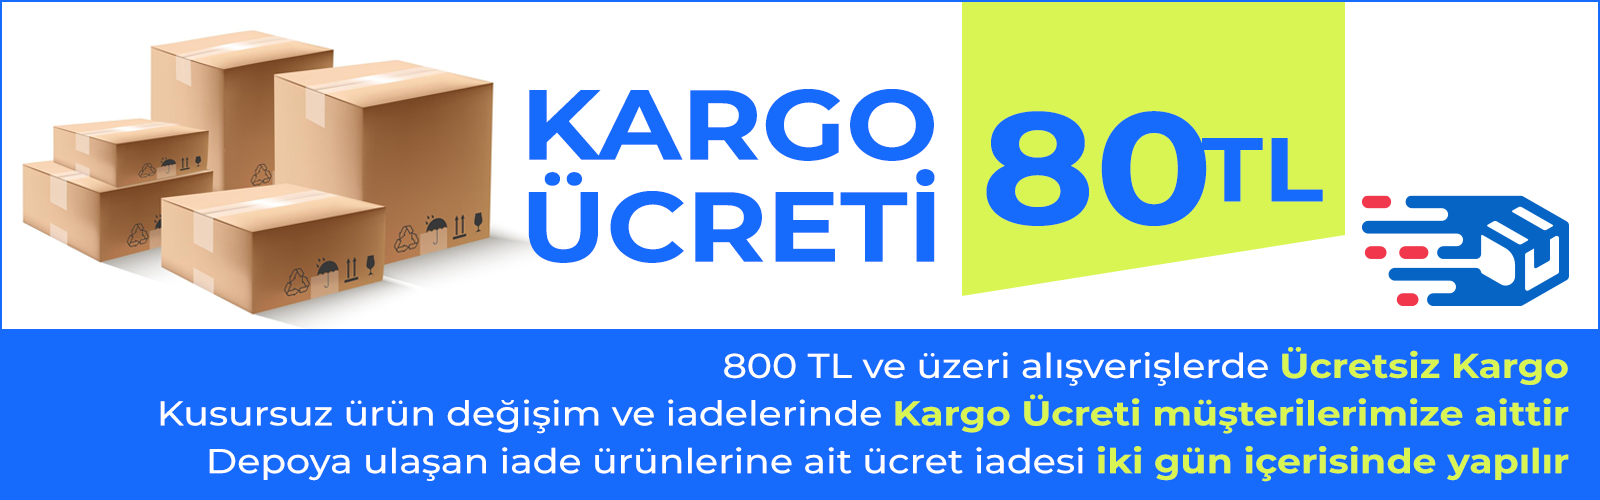 kargo-banneri.png (167 KB)